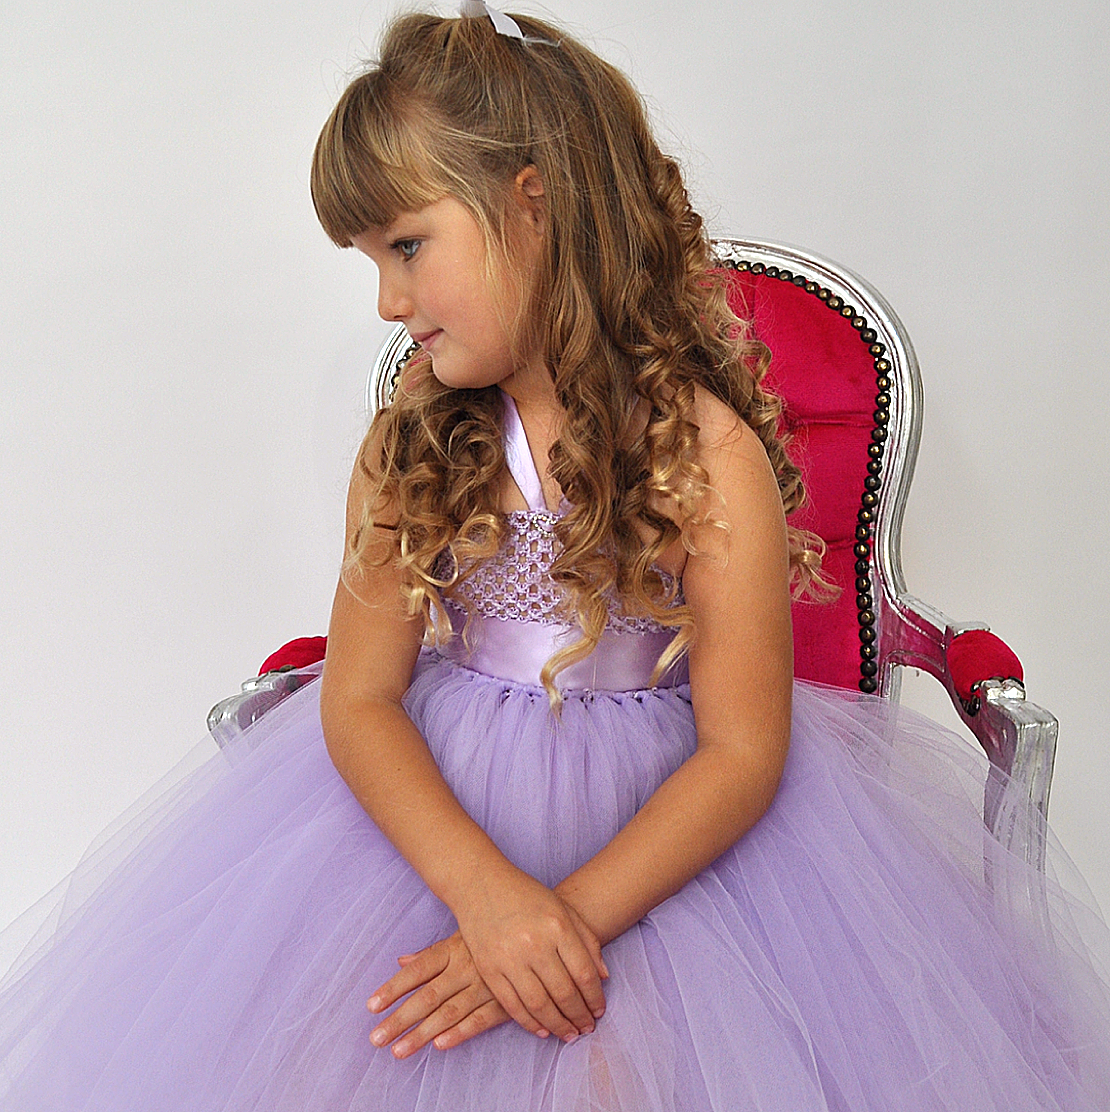 Princess Party Dress (Lilac)